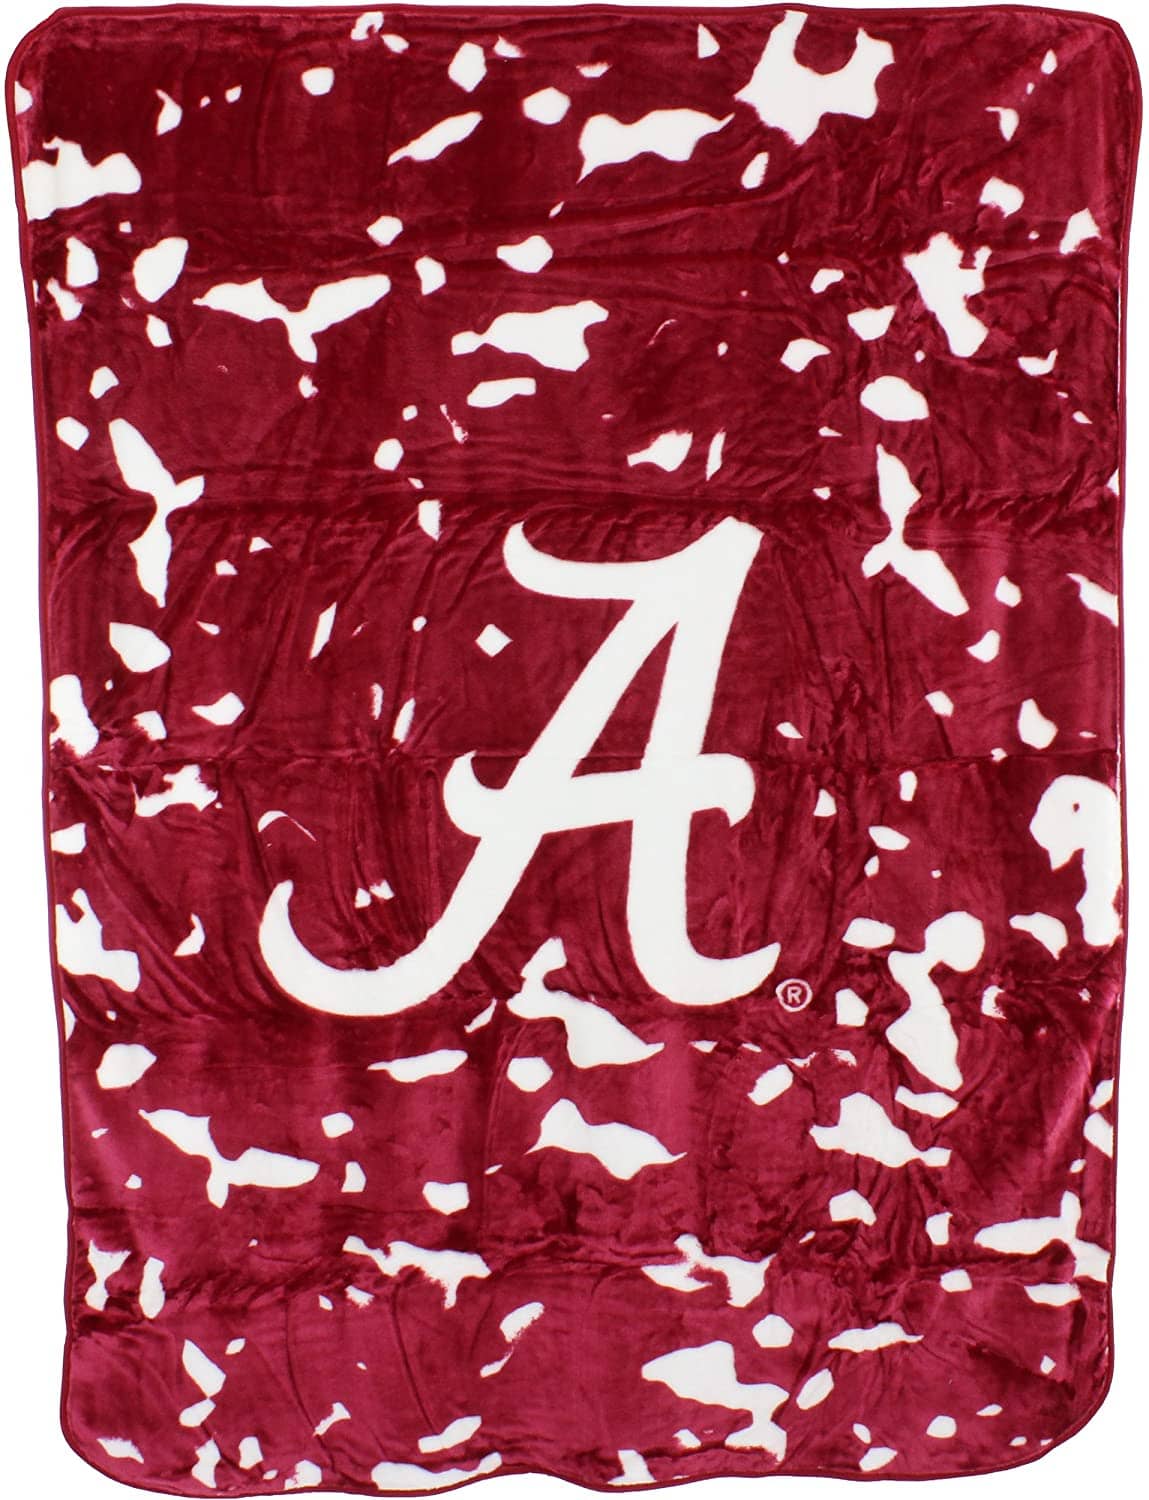 Ncaa Throw Blanket Alabama Crimson Tide Fleece Blanket